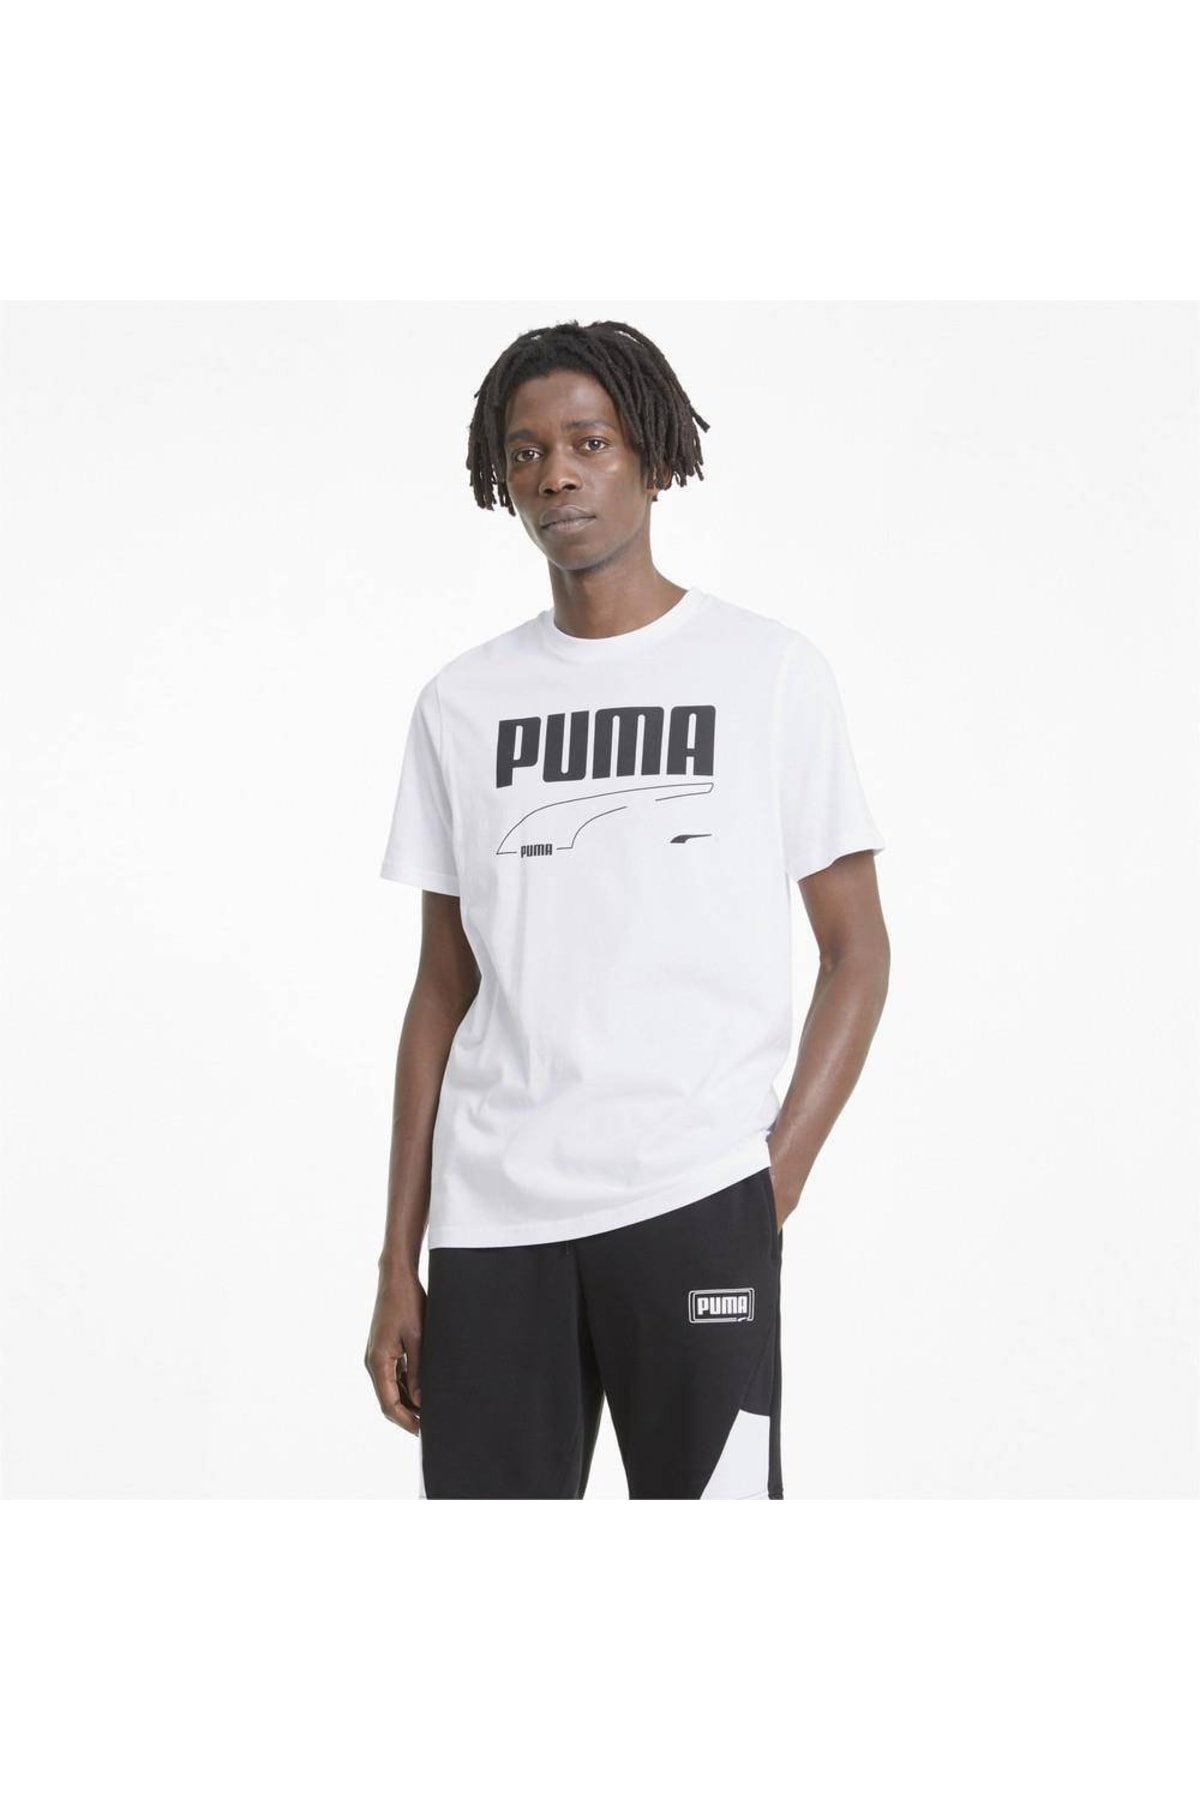 Puma Rebel Tee T-shirt 585738 02